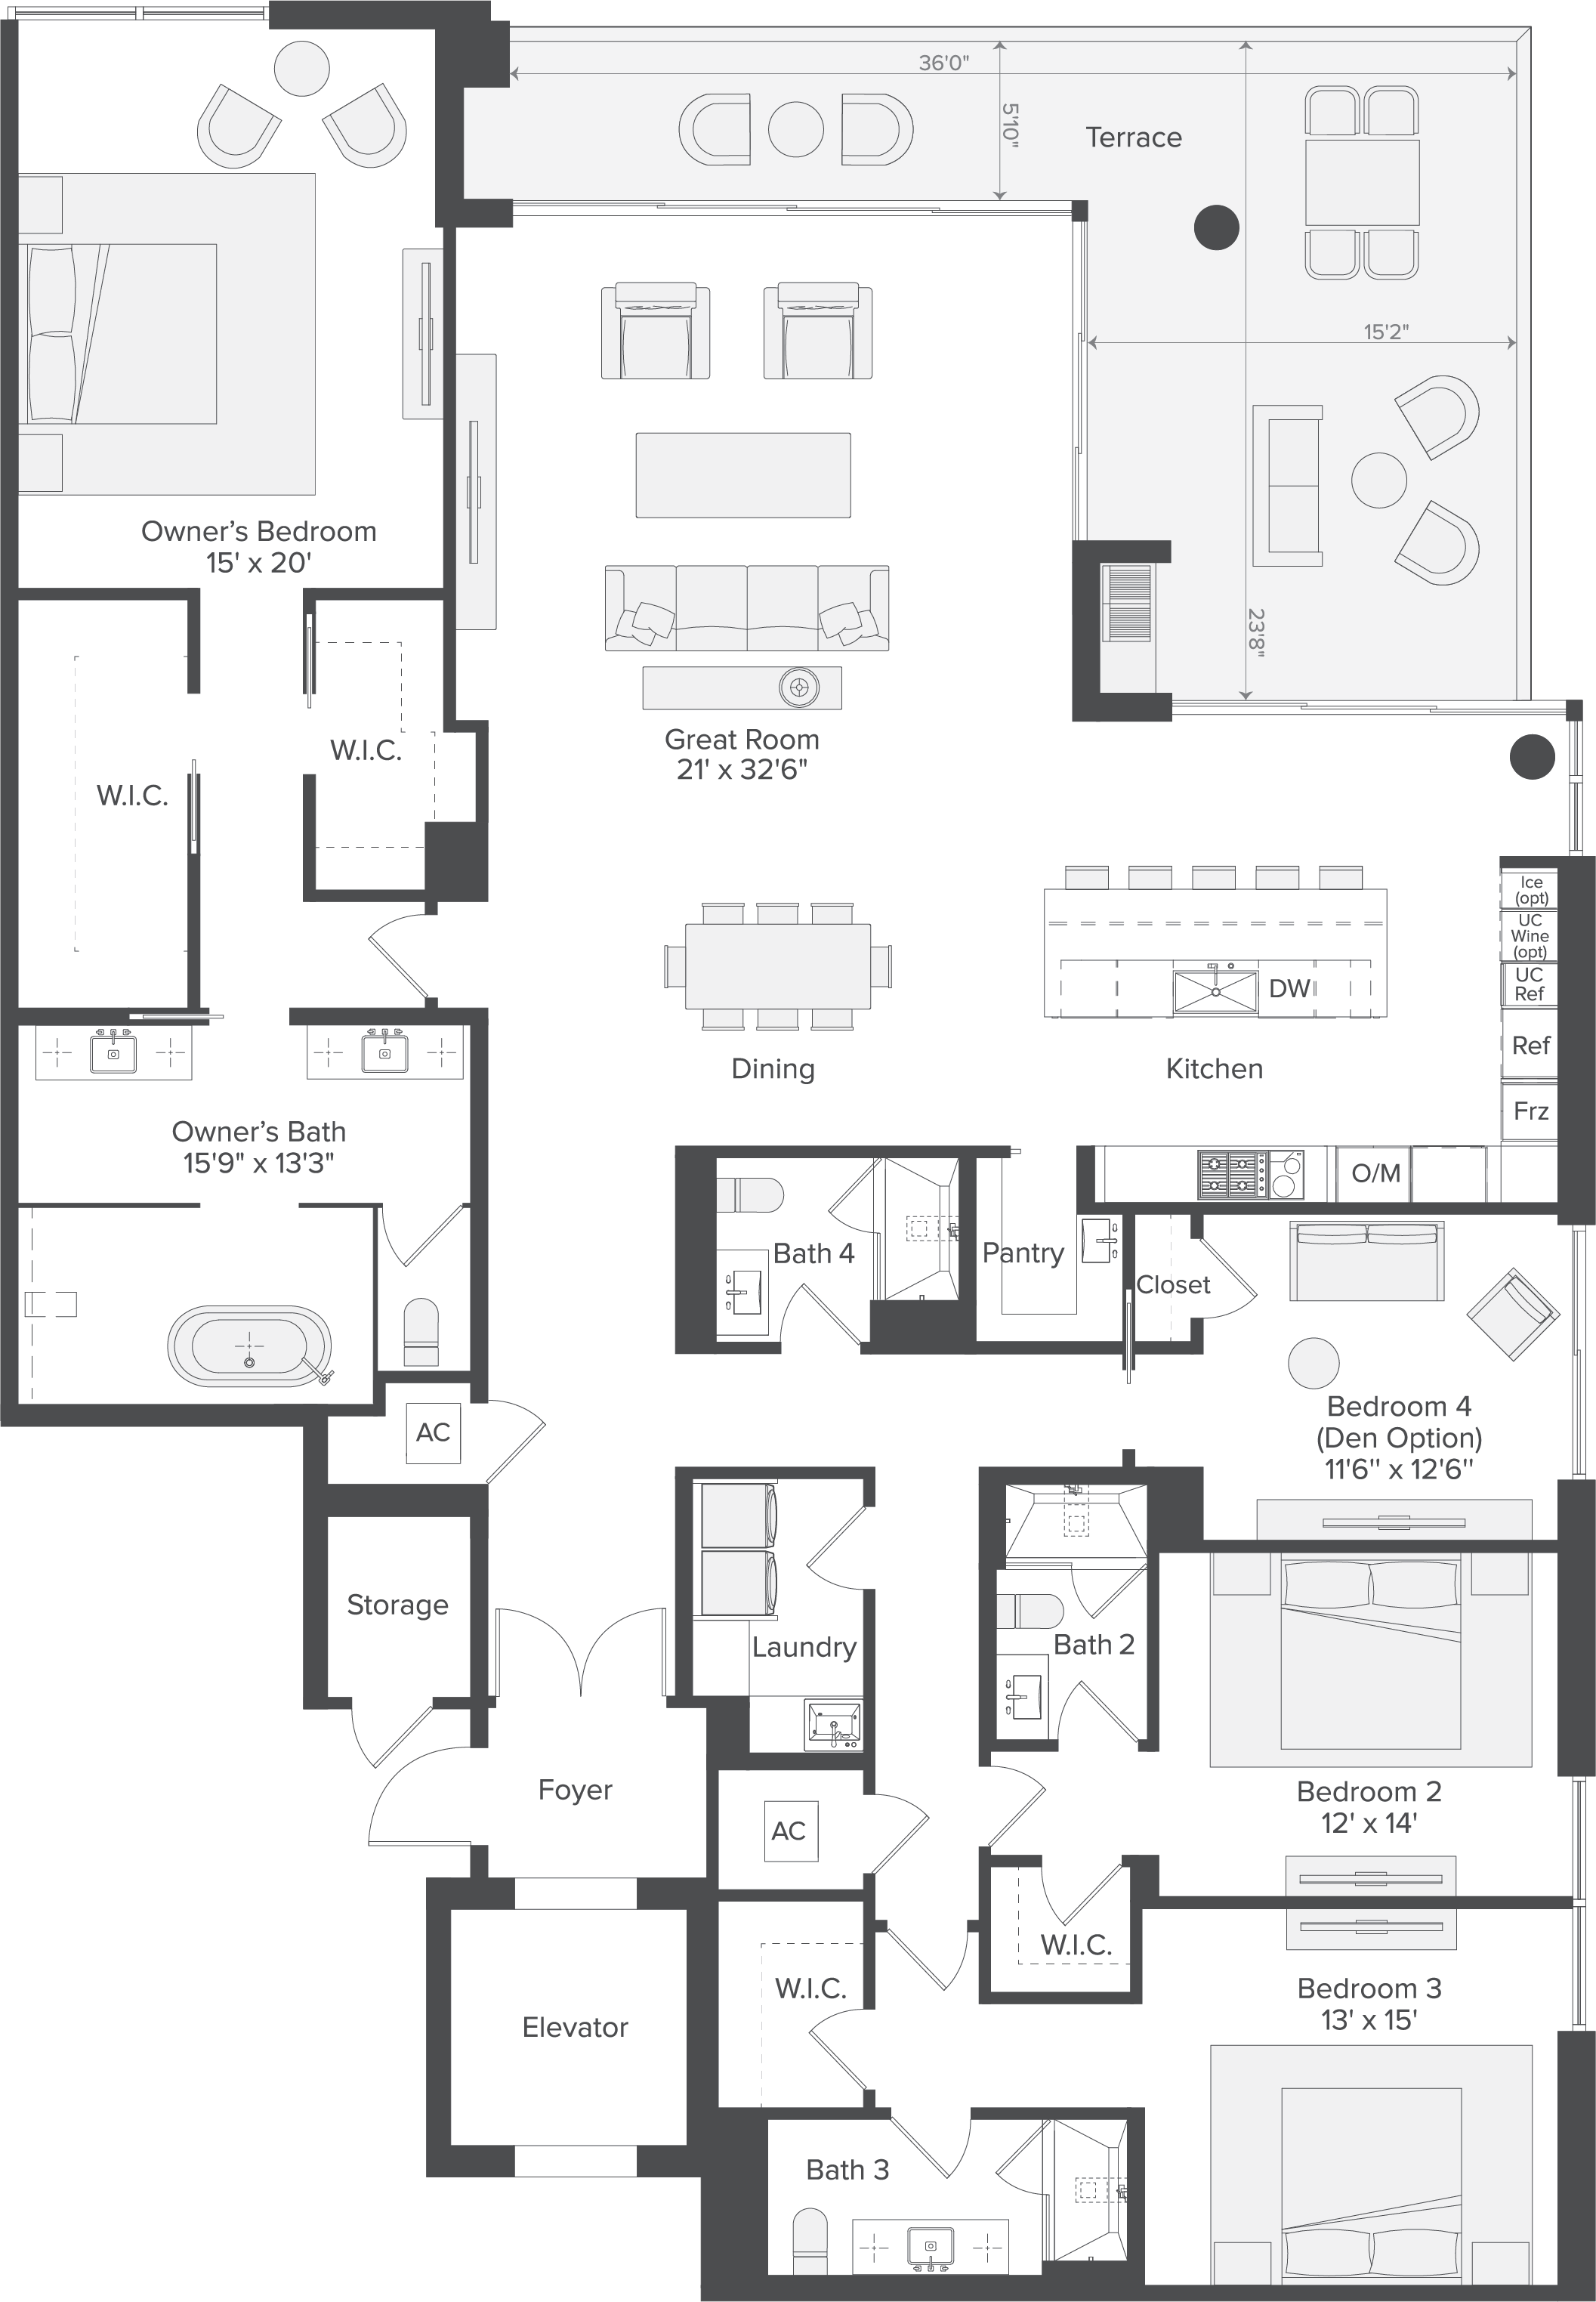 Penthouse 02 - Floorplan Image